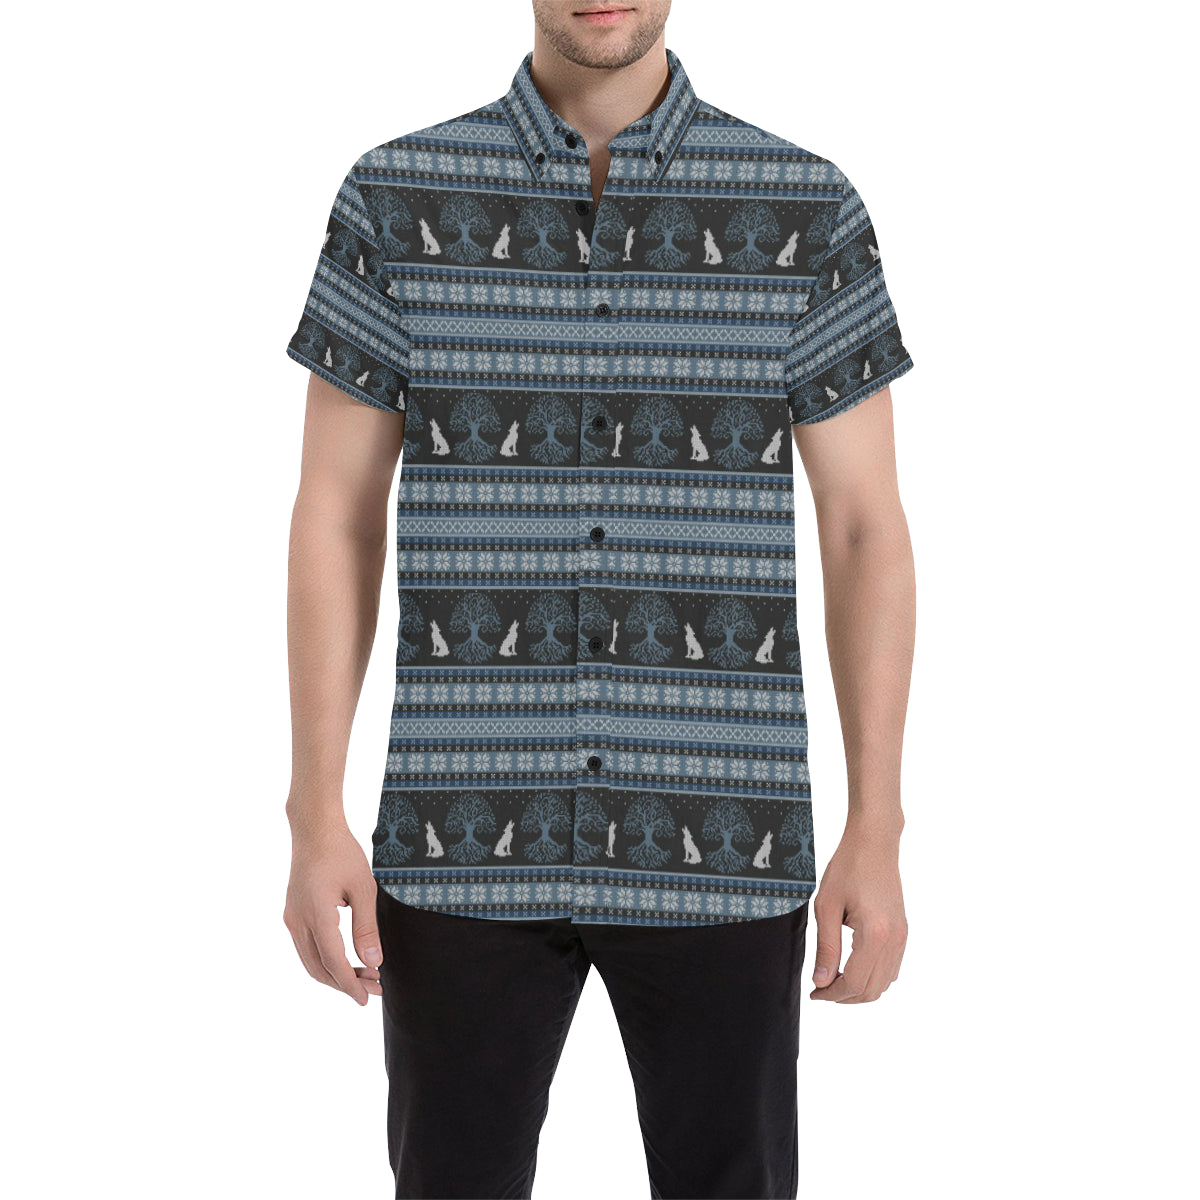 Wolf Tree of Life Knit Design Print Men's Short Sleeve Button Up Shirt